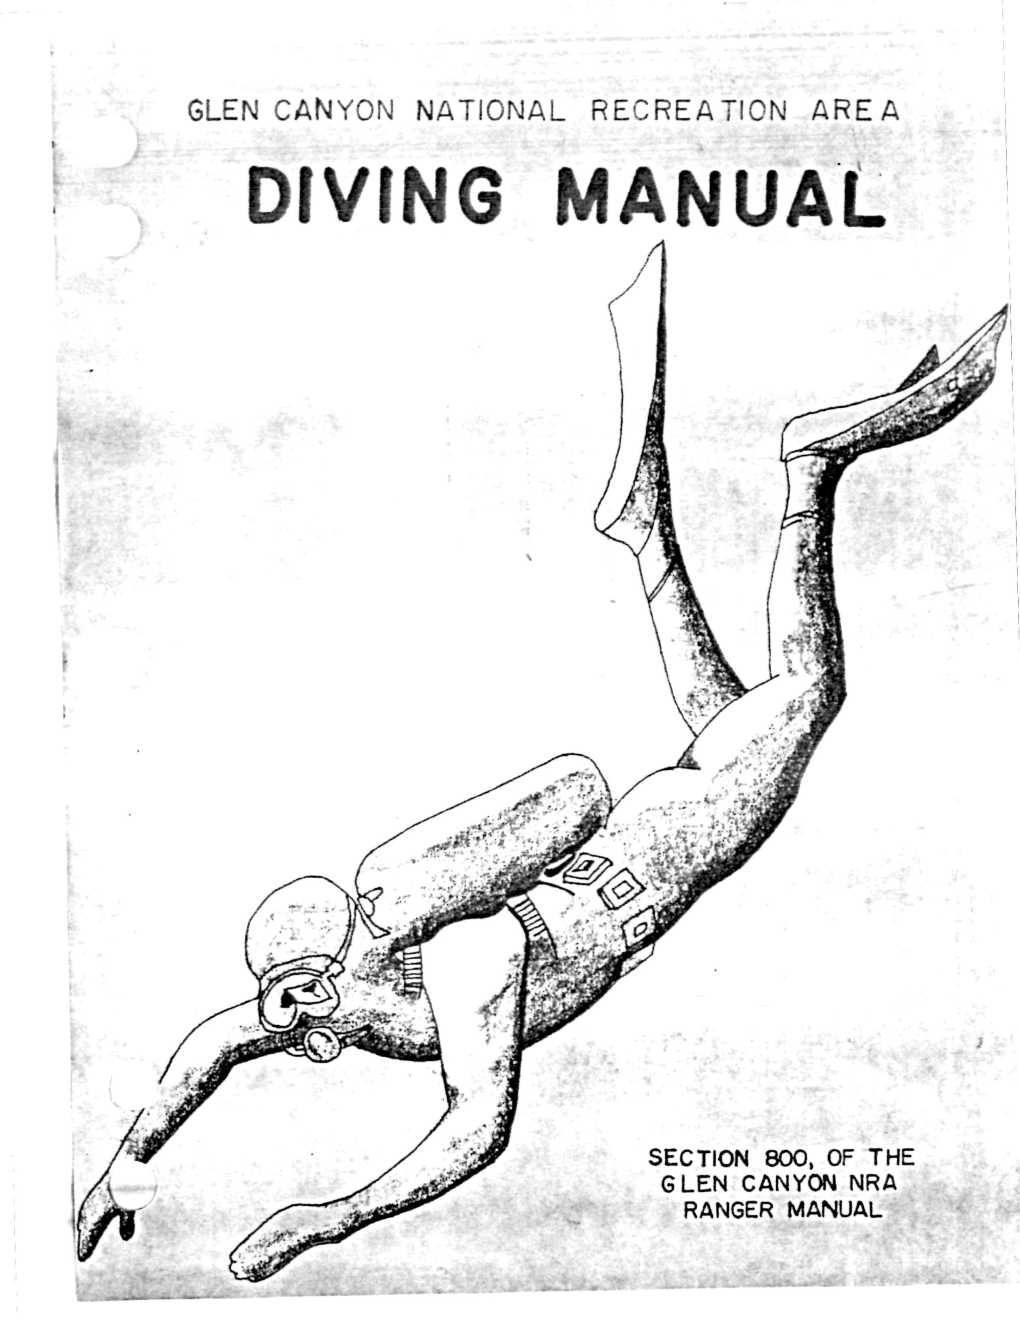 Glen Canyon National Recreation Area Diving Manual